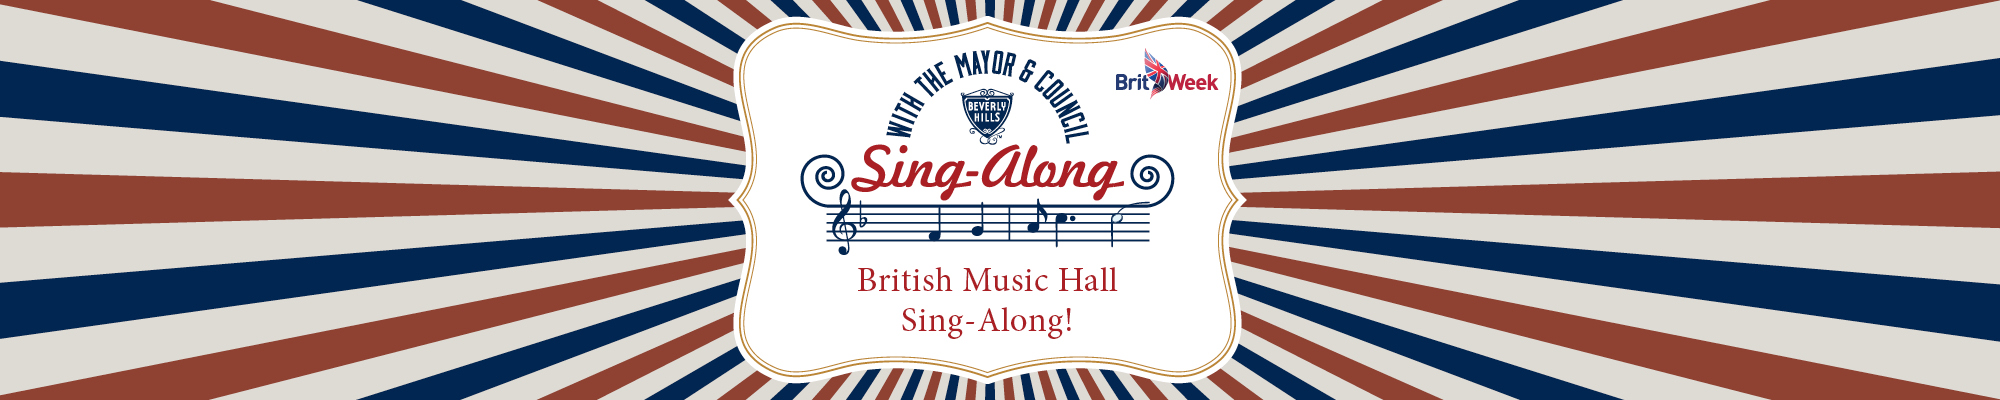 British Music Hall Sing-Along!